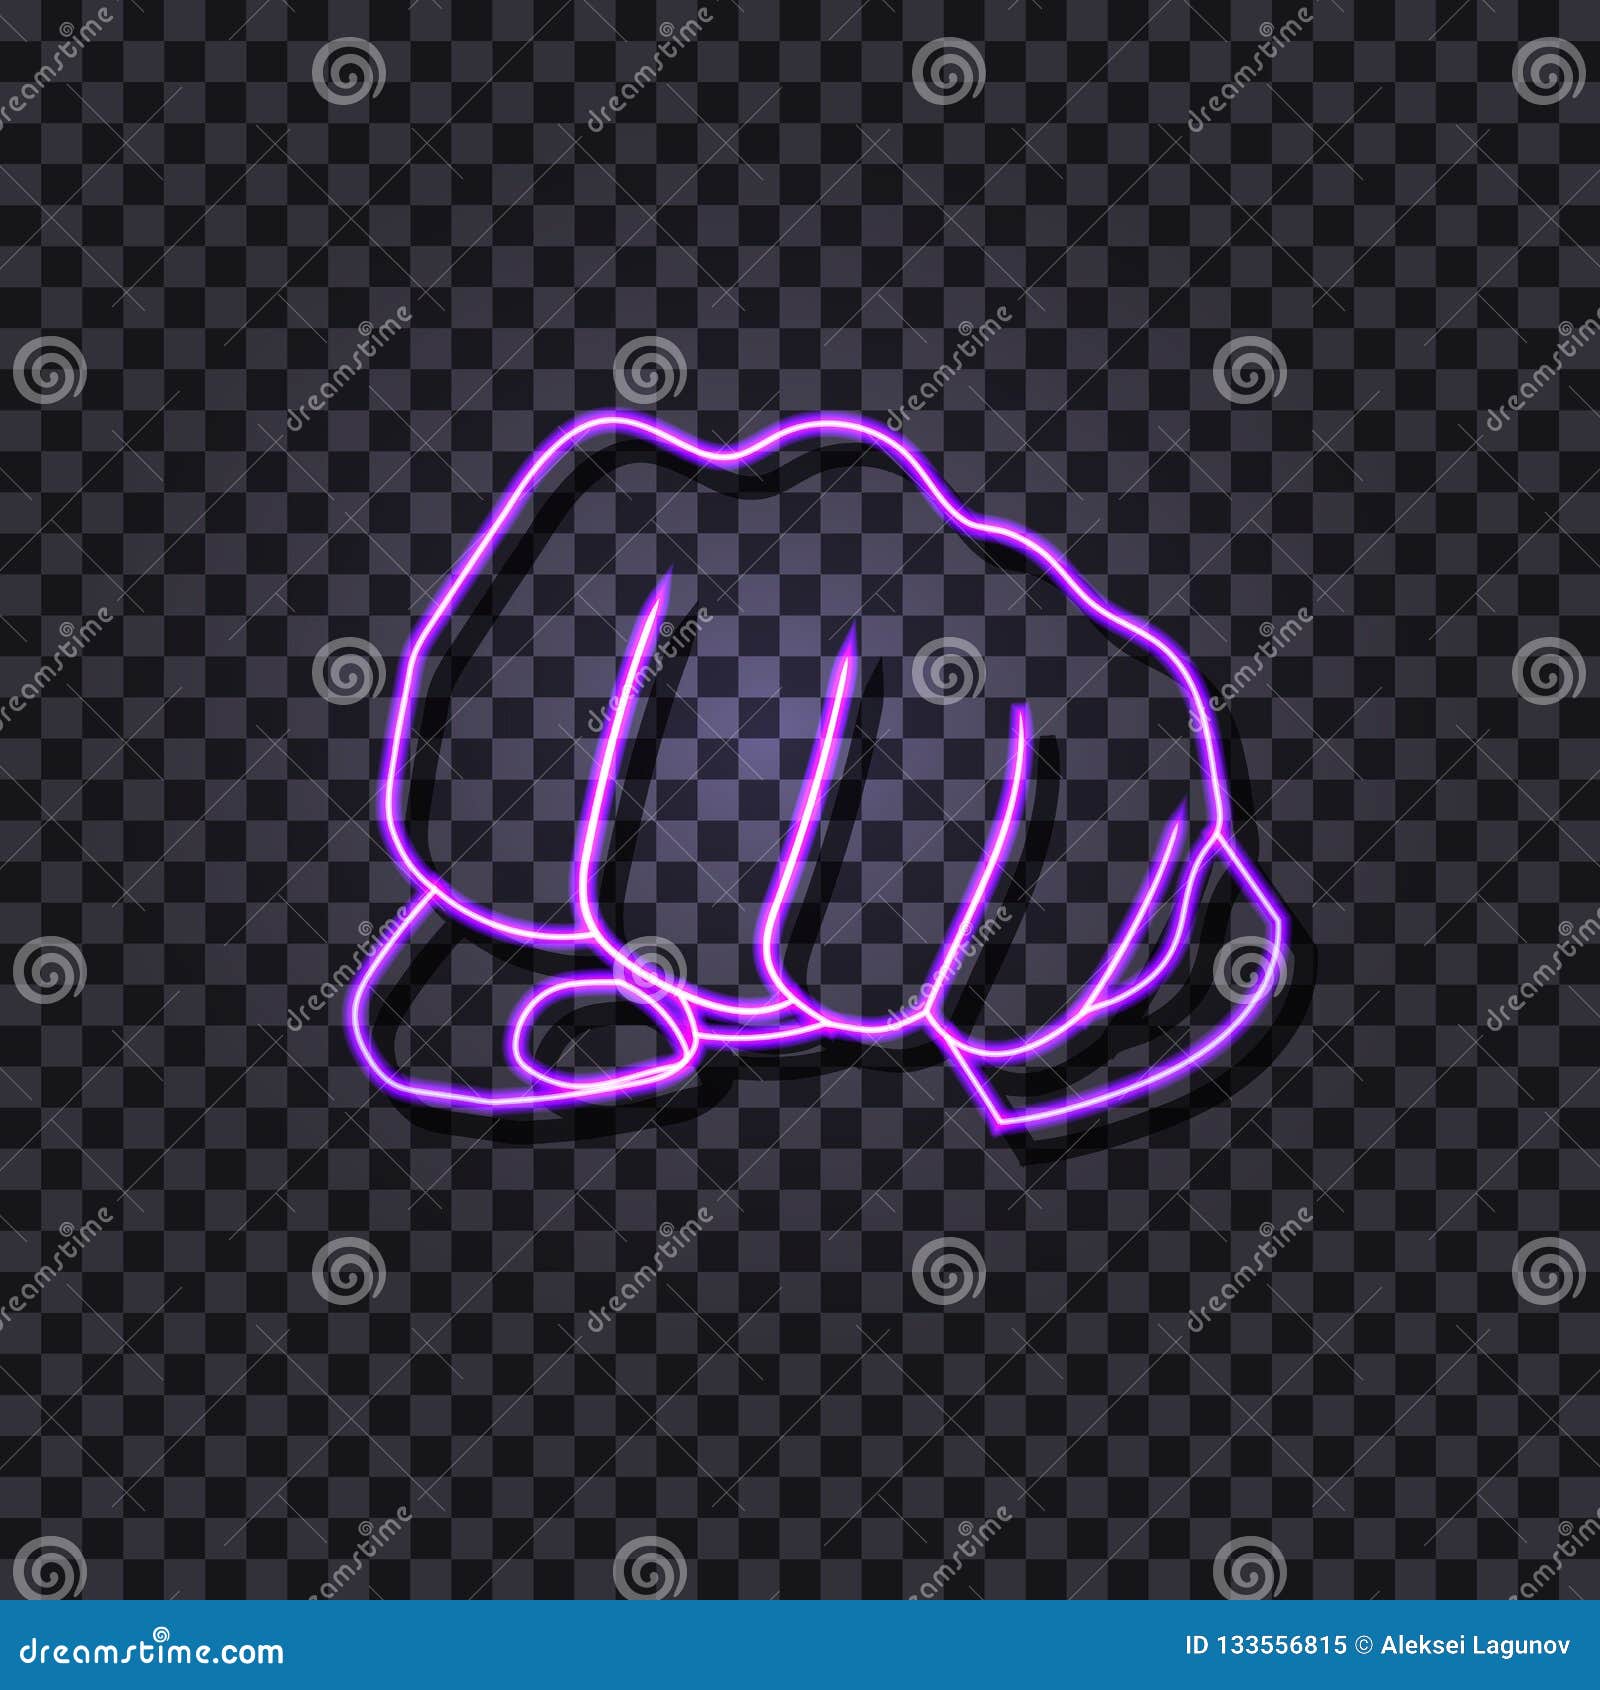  ultraviolet color neon fist, human hand gesturing, sign  on dark background.